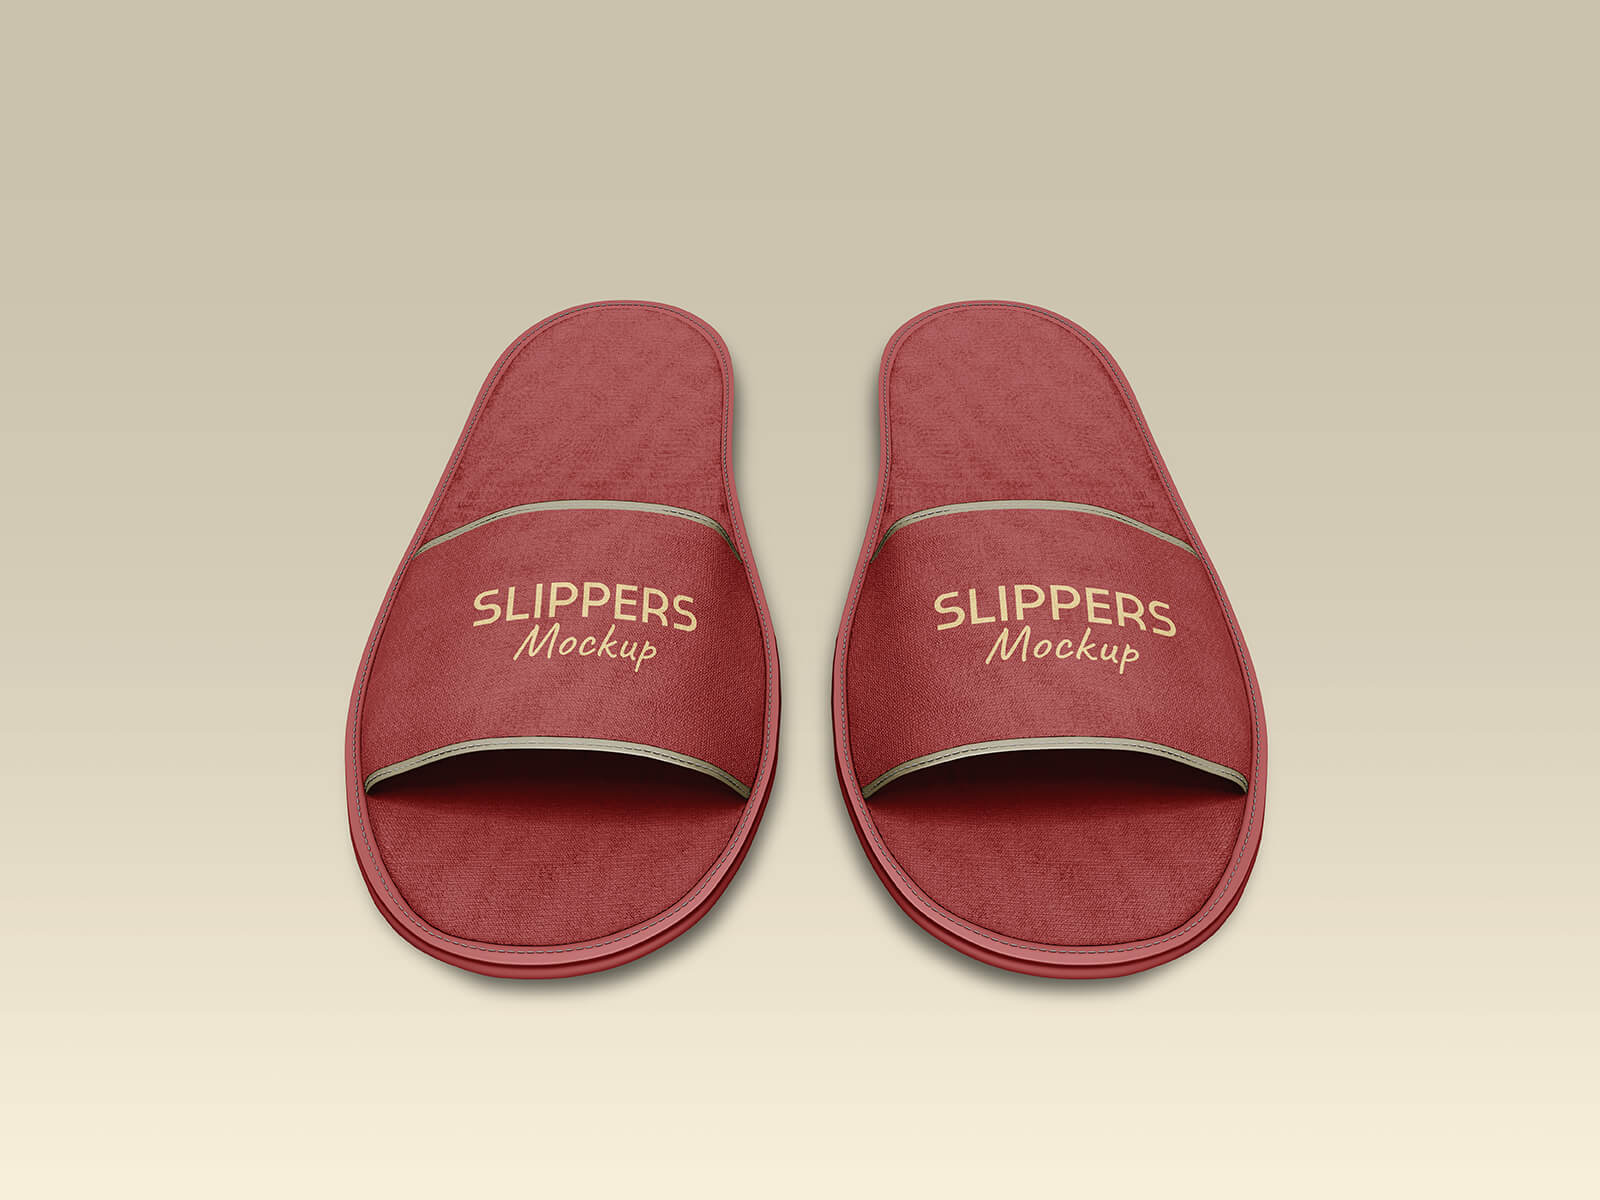 Free Hotel / Spa Slippers Mockup PSD Set